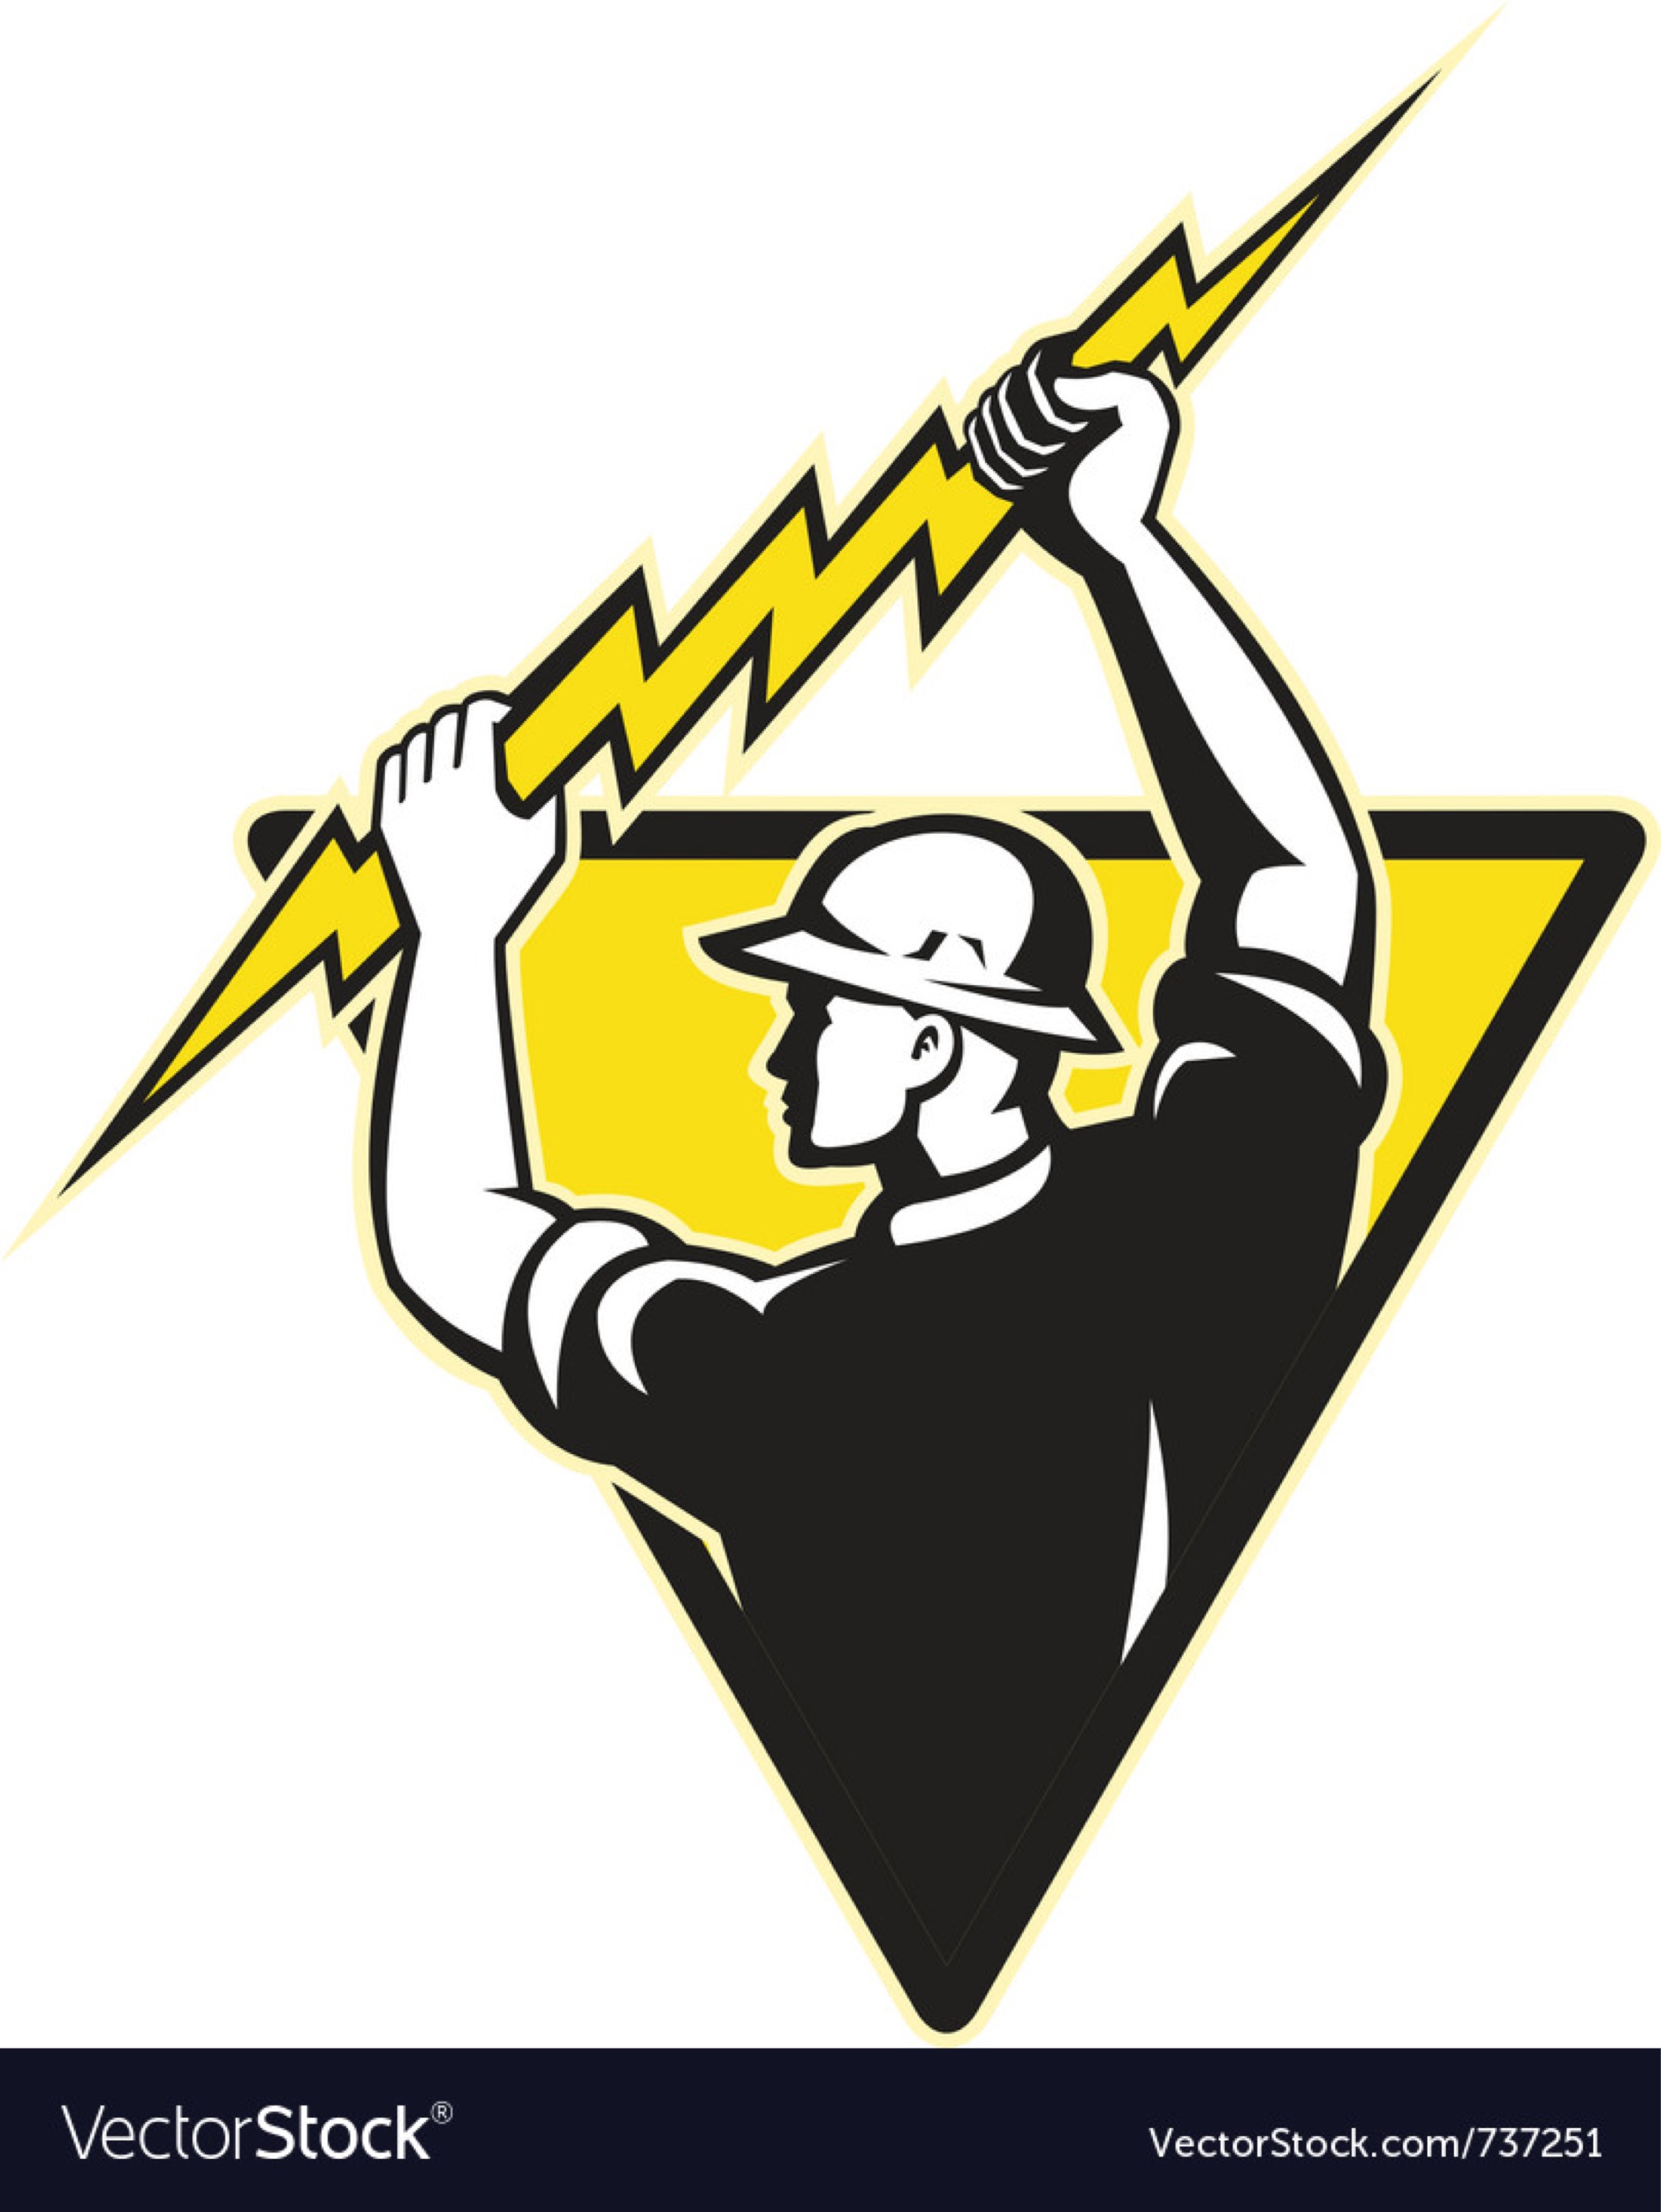 Prodigy Electric Logo